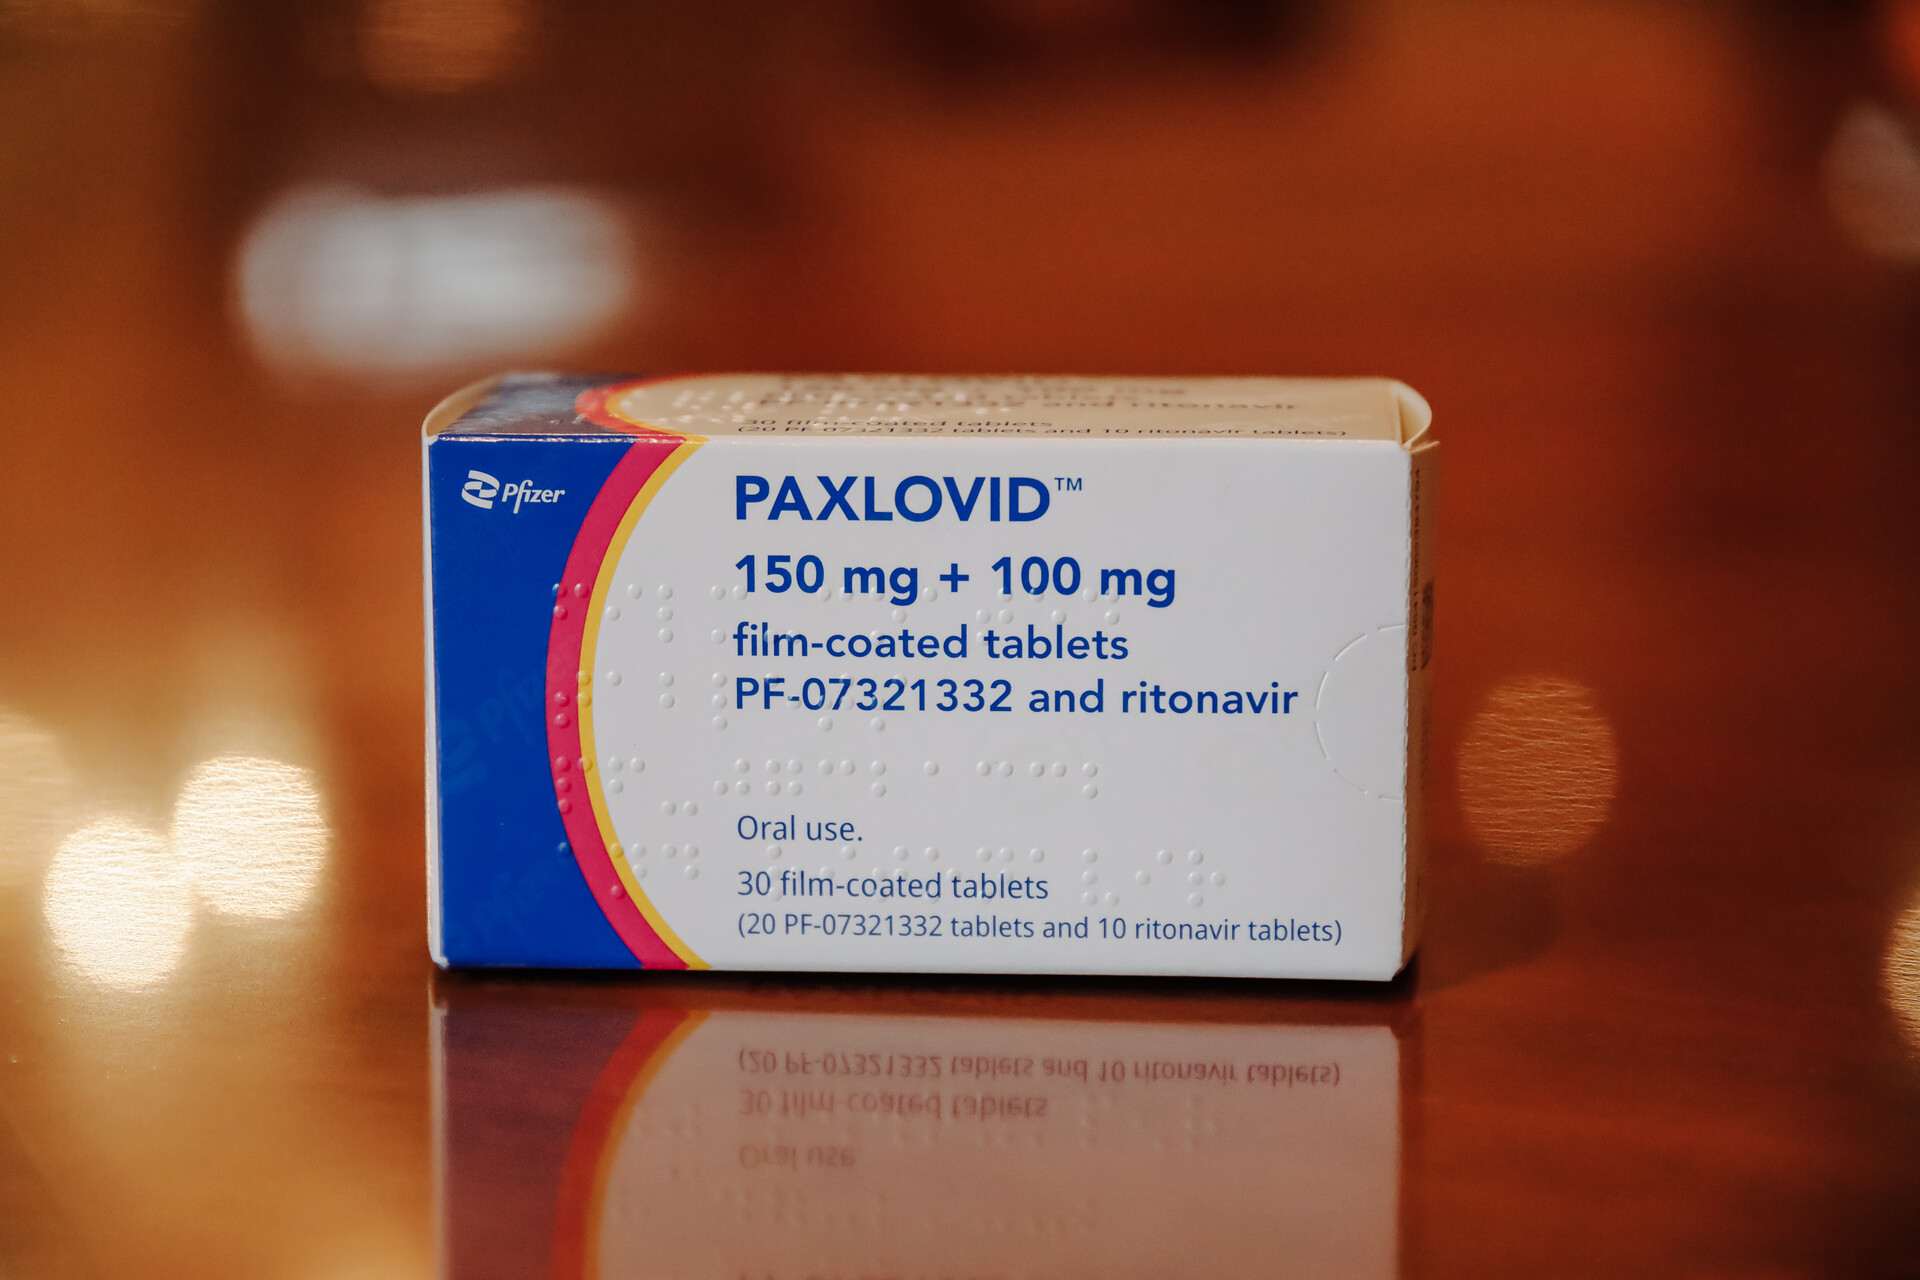 A box of the COVID antiviral drug Paxlovid, placed on a shiny wooden table. The box says "PAXLOVID 150 mg + 100 mg film-coated tablets". 